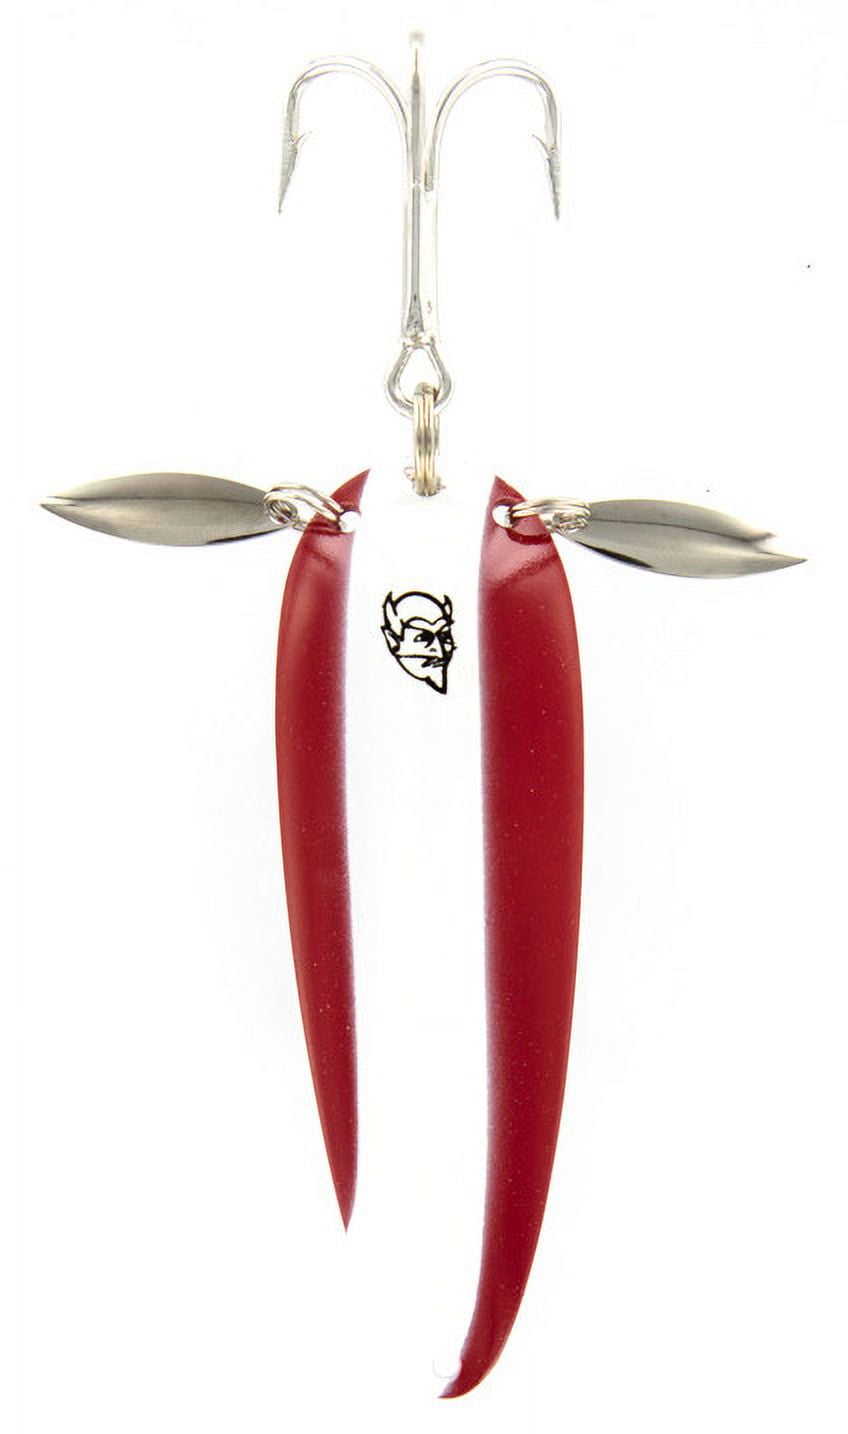 Eppinger Dardevle Klicker Spoon, Red & White, 2/5 oz., Fishing Spoons 